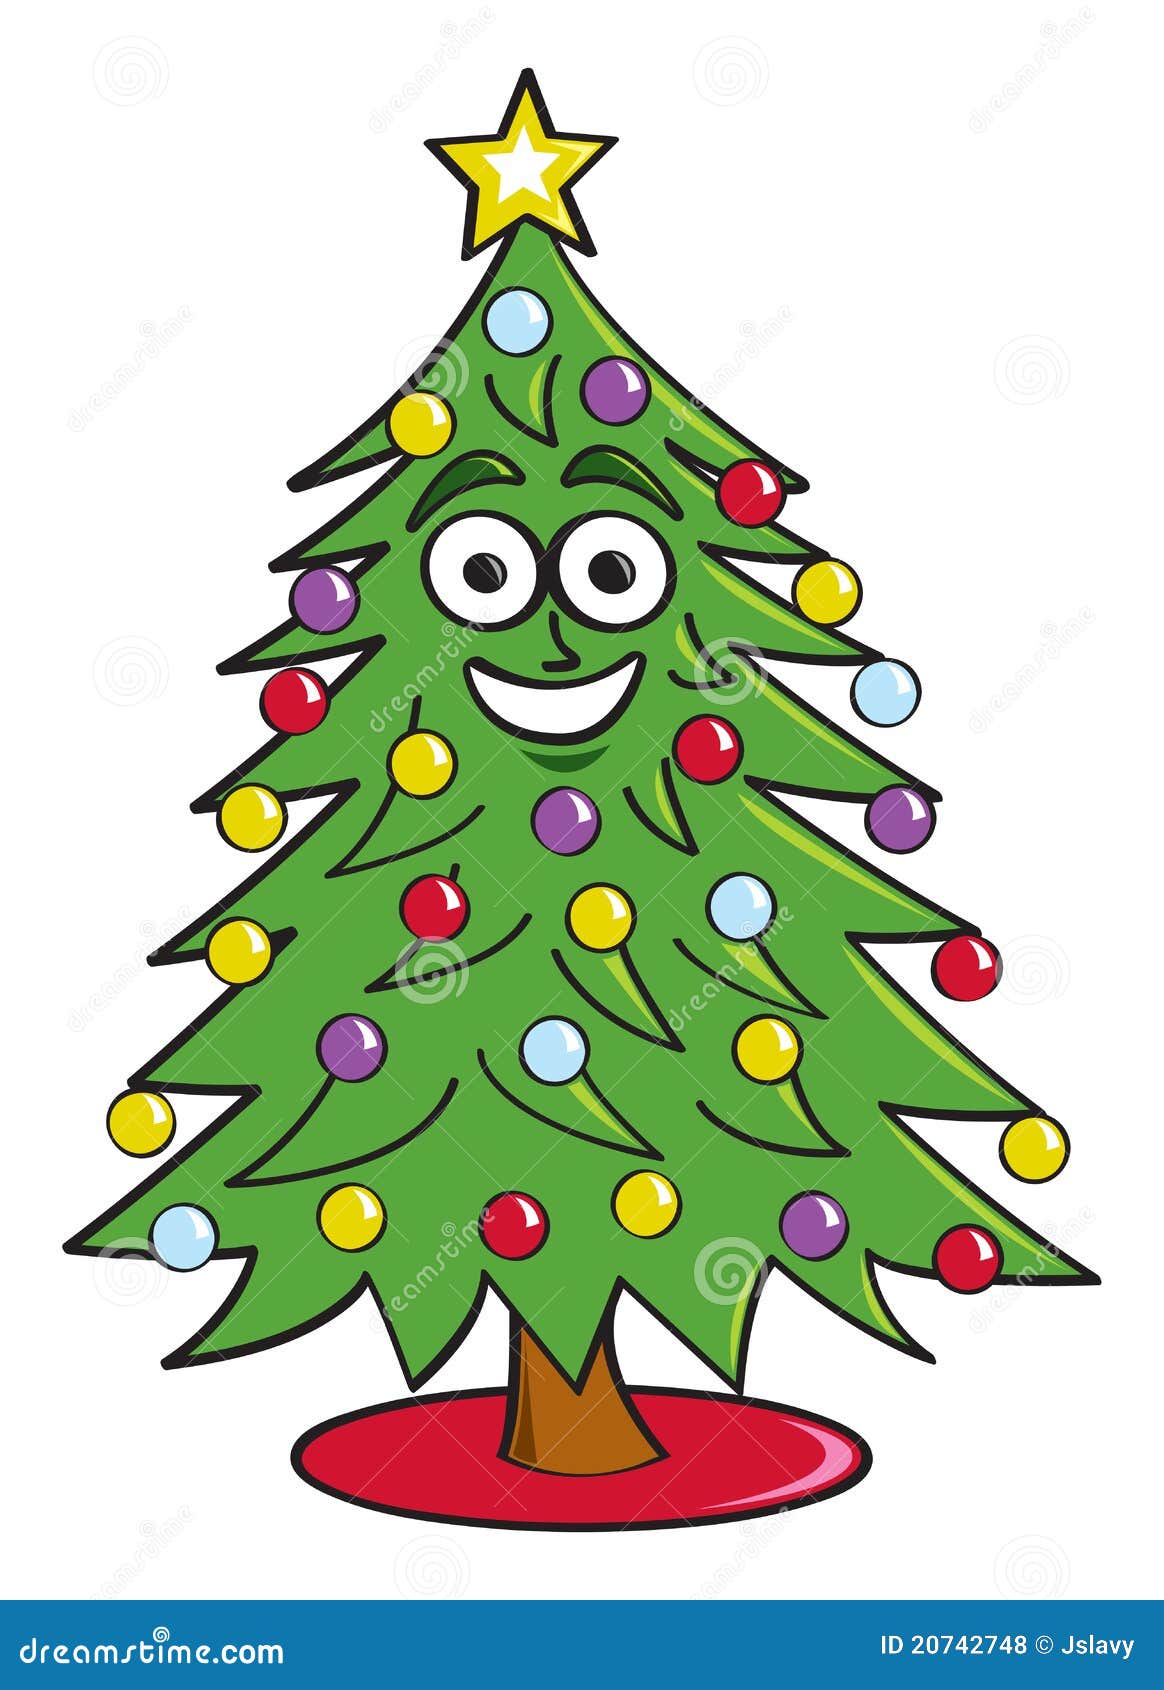 Cartoon Christmas Tree stock vector. Illustration of silly - 20742748